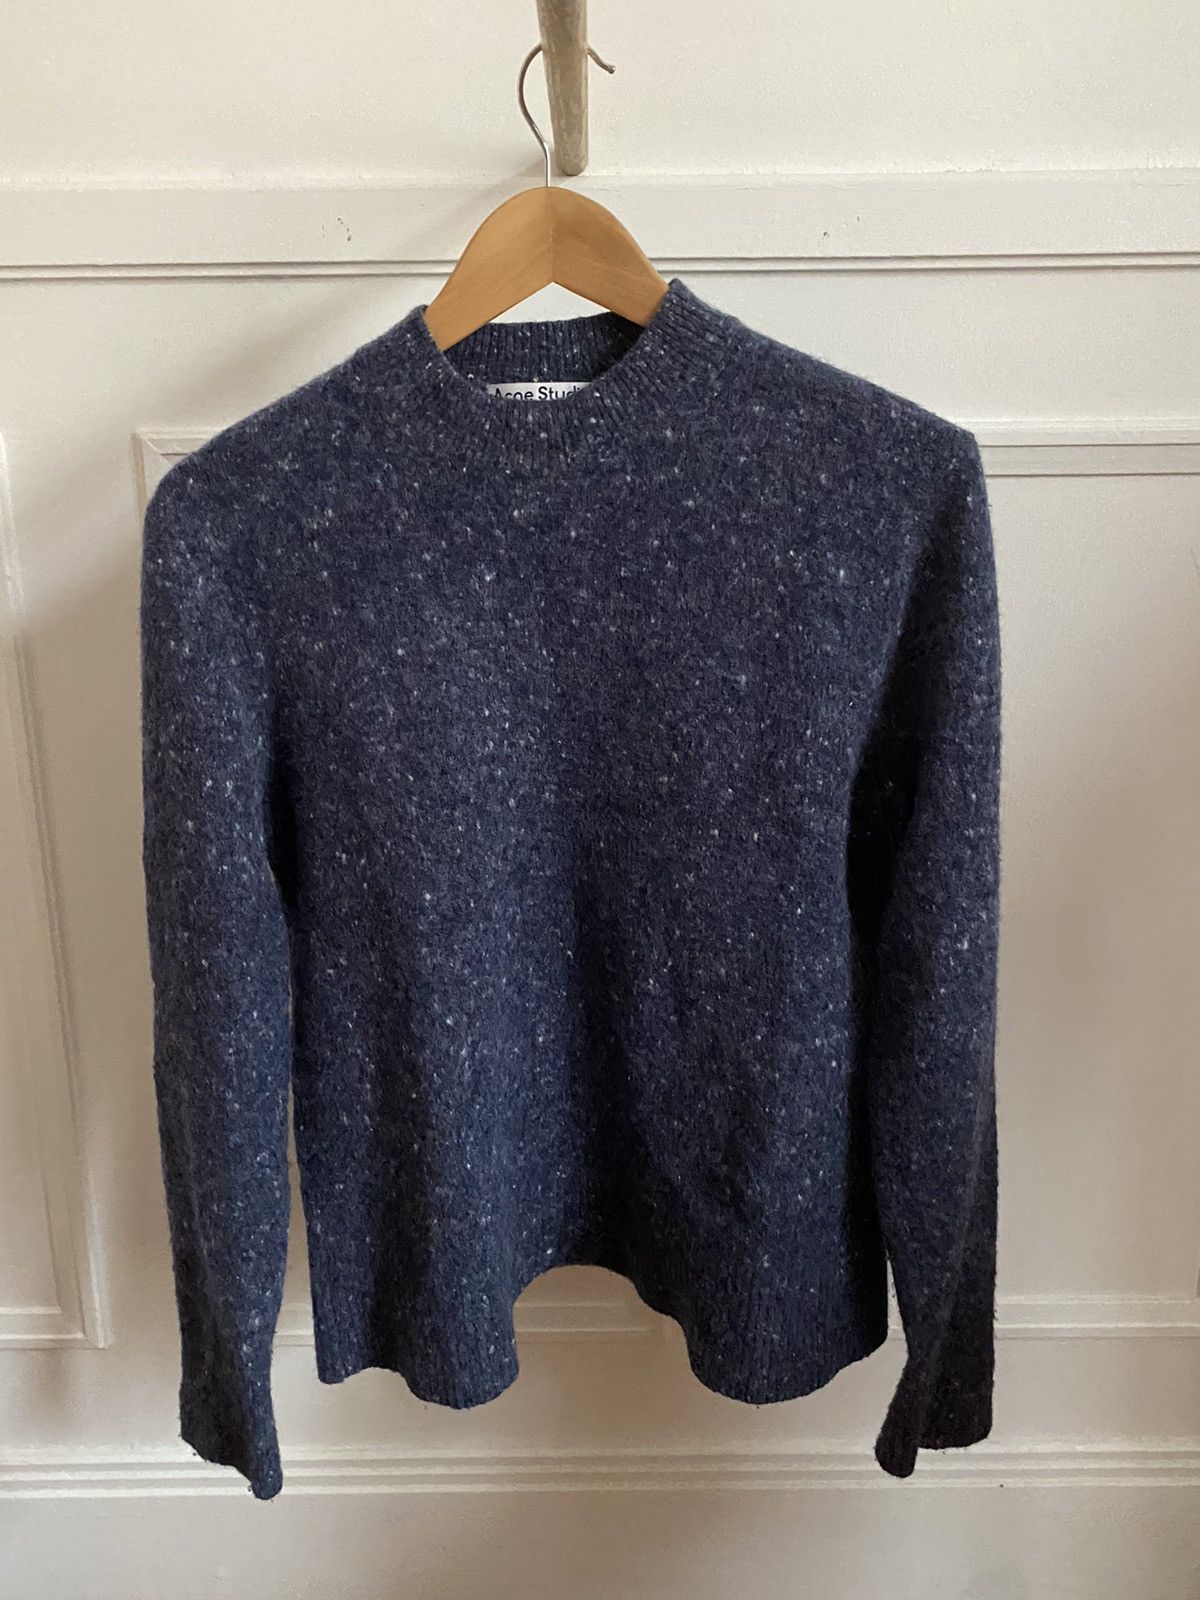 Acne Studios Cashmere blend sweater | Grailed